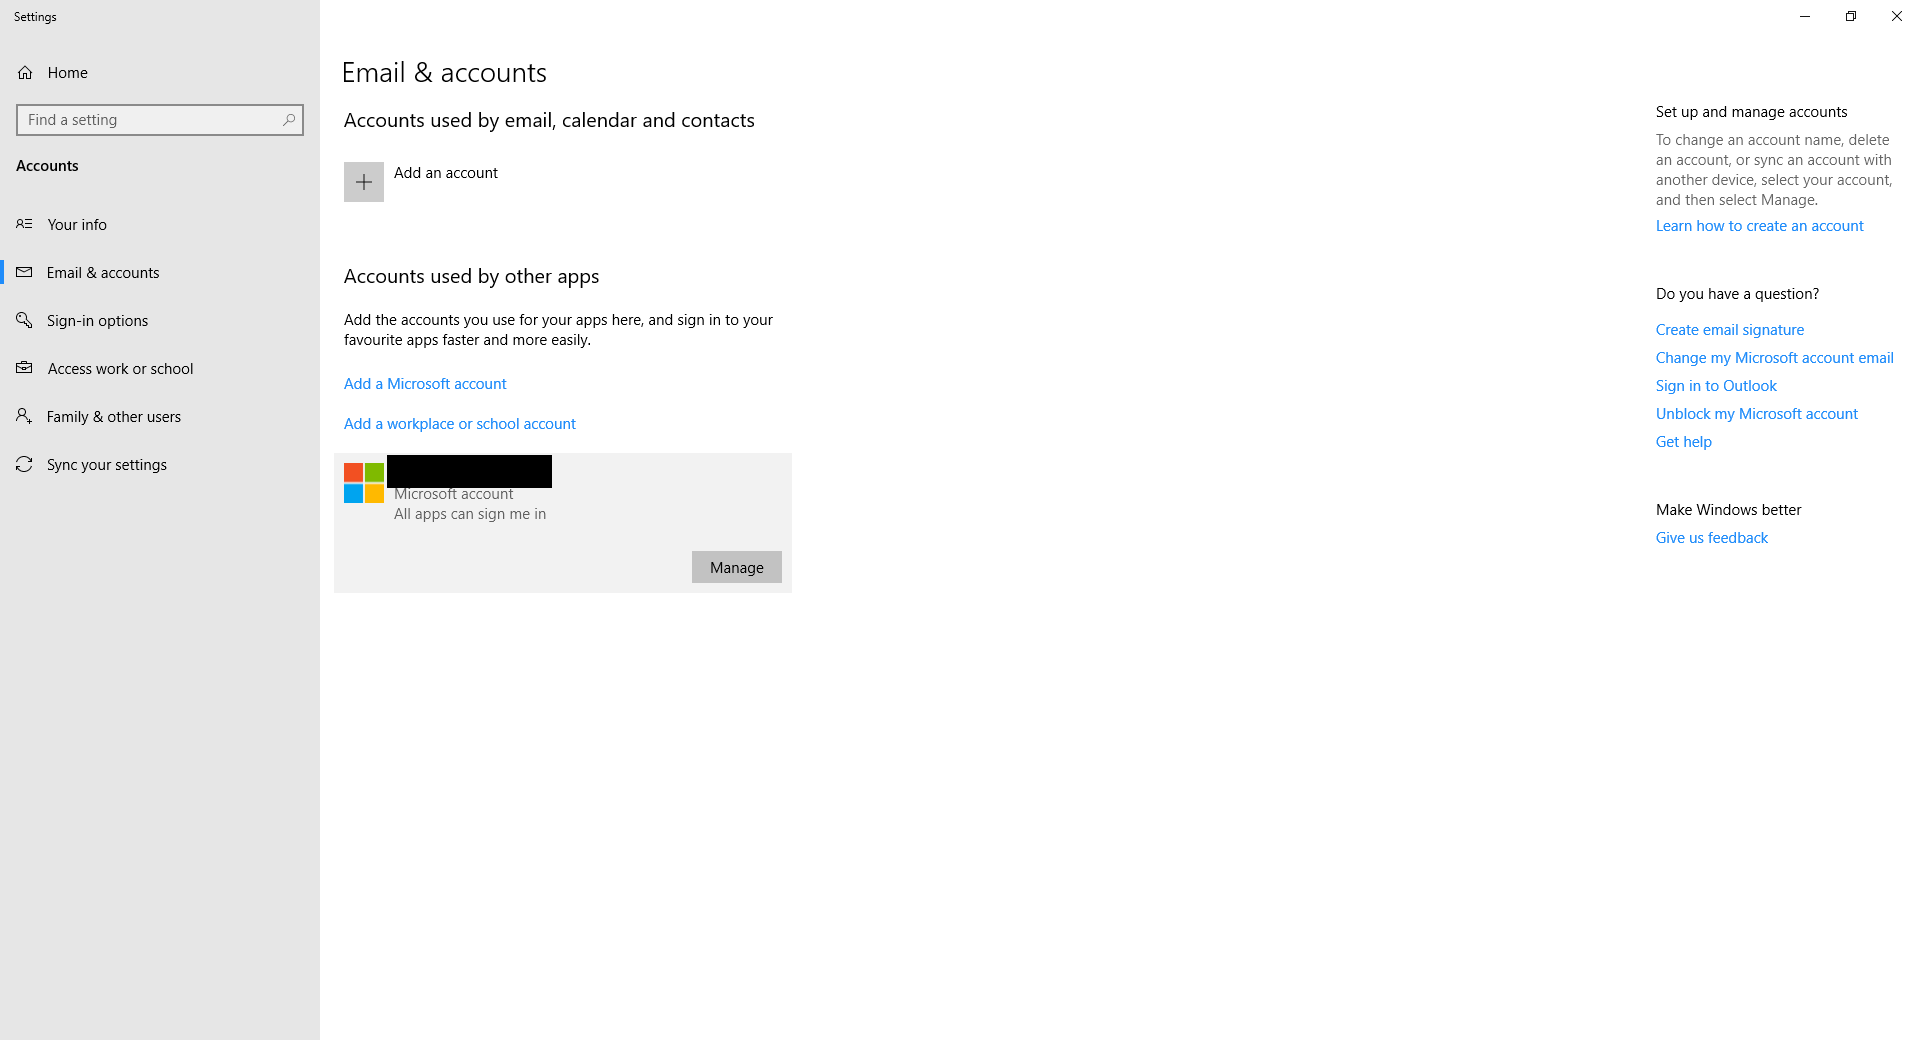 Windows 10 Bug Can't disconnect Microsoft account? b16b60cf-7a67-4058-a060-e7f5a9d64572?upload=true.png